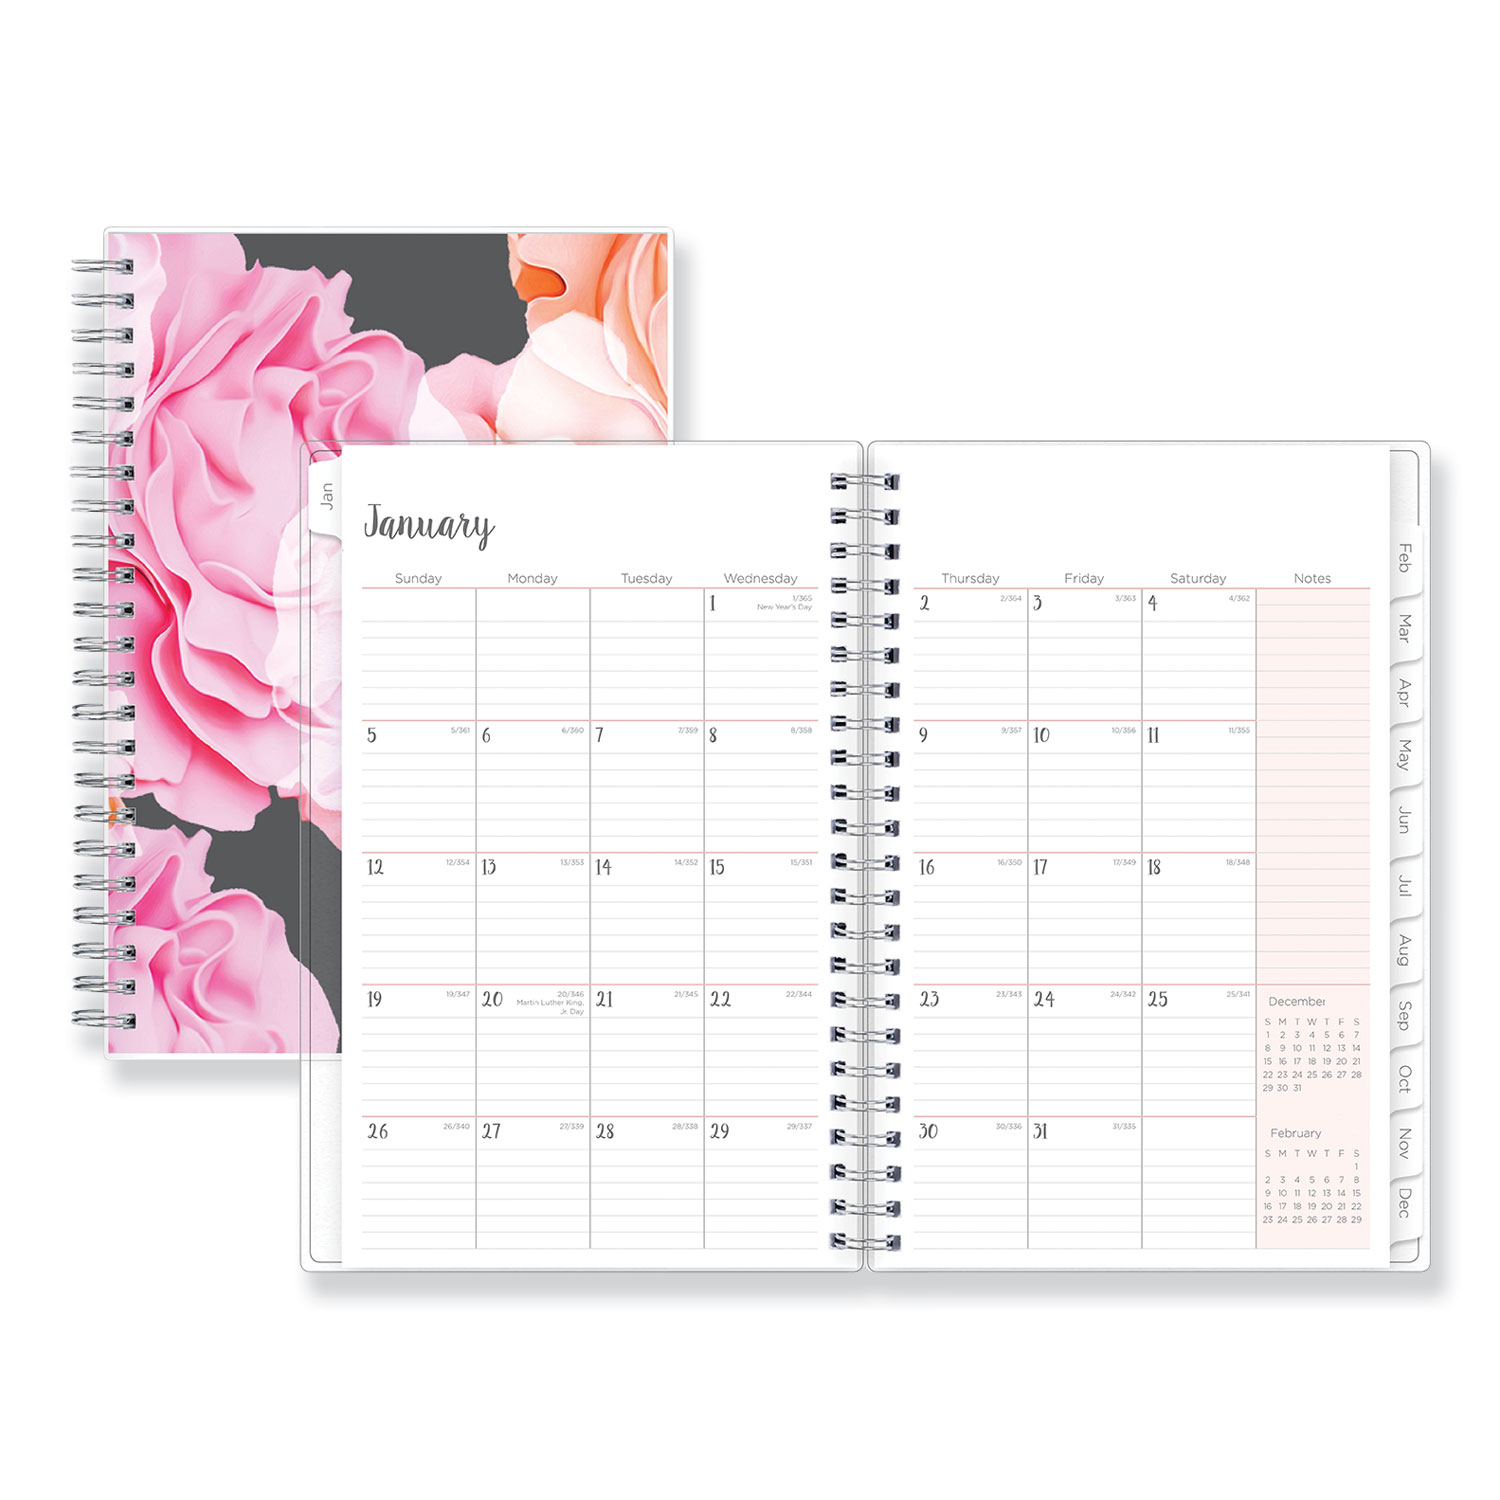  Blue Sky 110396 Joselyn Weekly/Monthly Wirebound Planner, 8 x 5, Light Pink/Peach/Black, 2020 (BLS110396) 